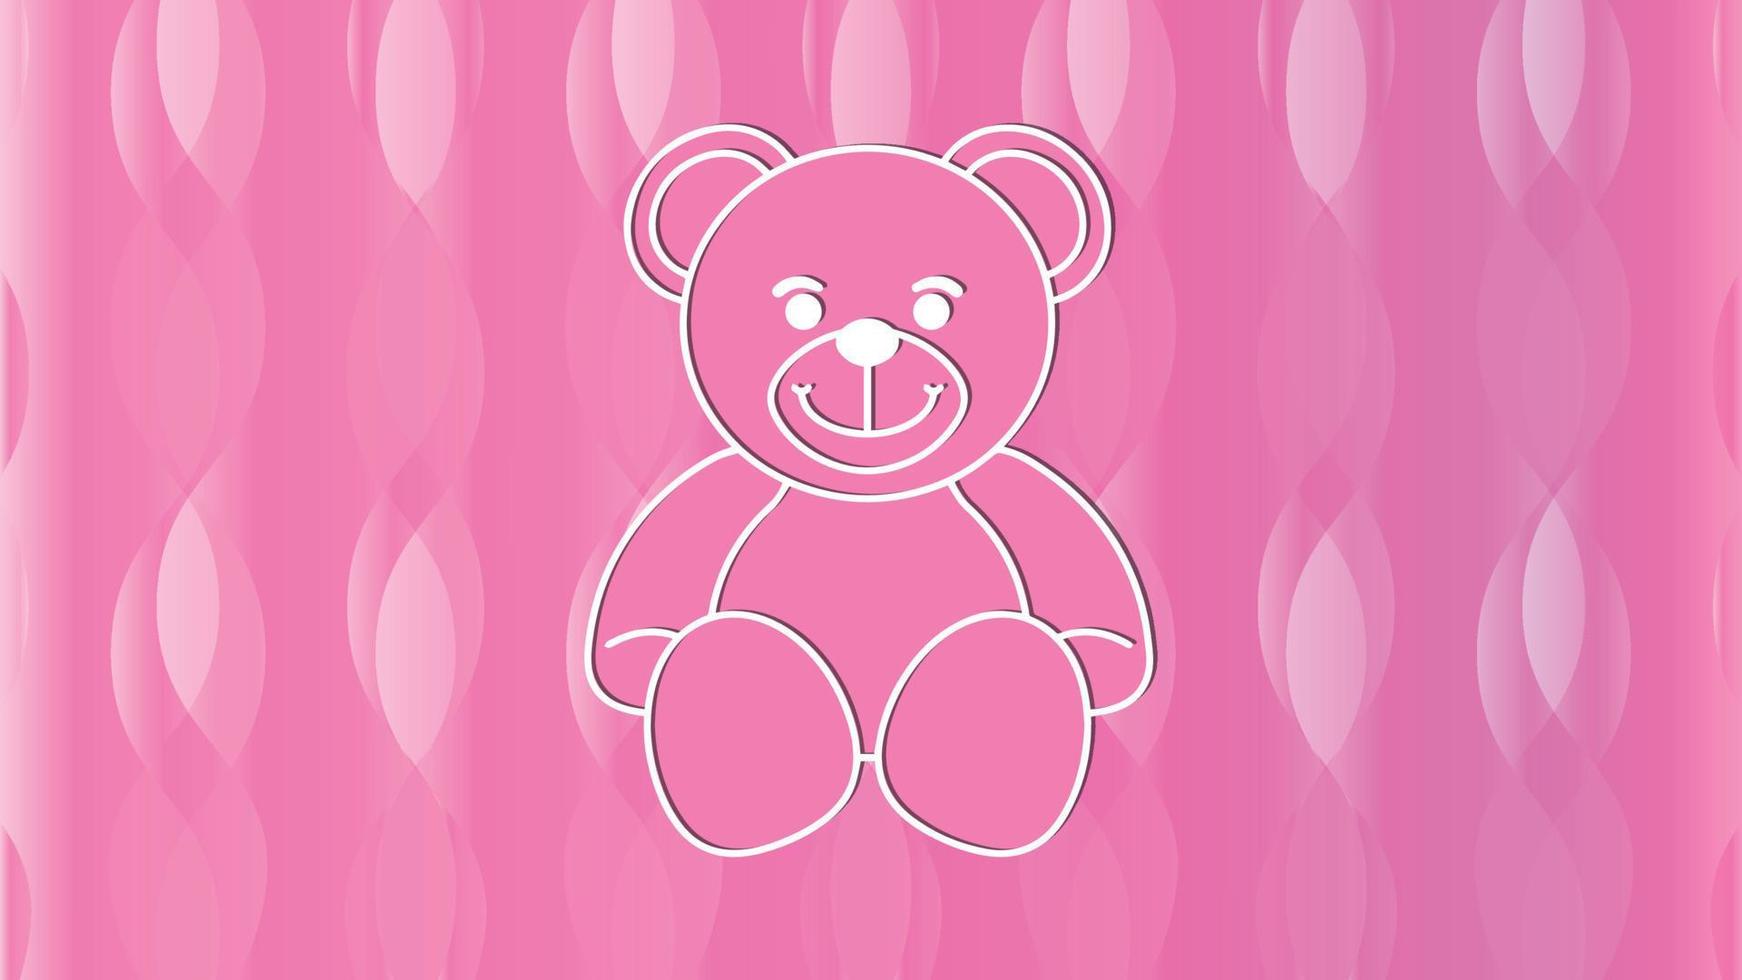 Happy Teddy Day background. Love Background. Pink Background. Teddy Day Greeting CardHappy Teddy Day background. Love Background. Pink Background. Teddy Day Greeting Card vector